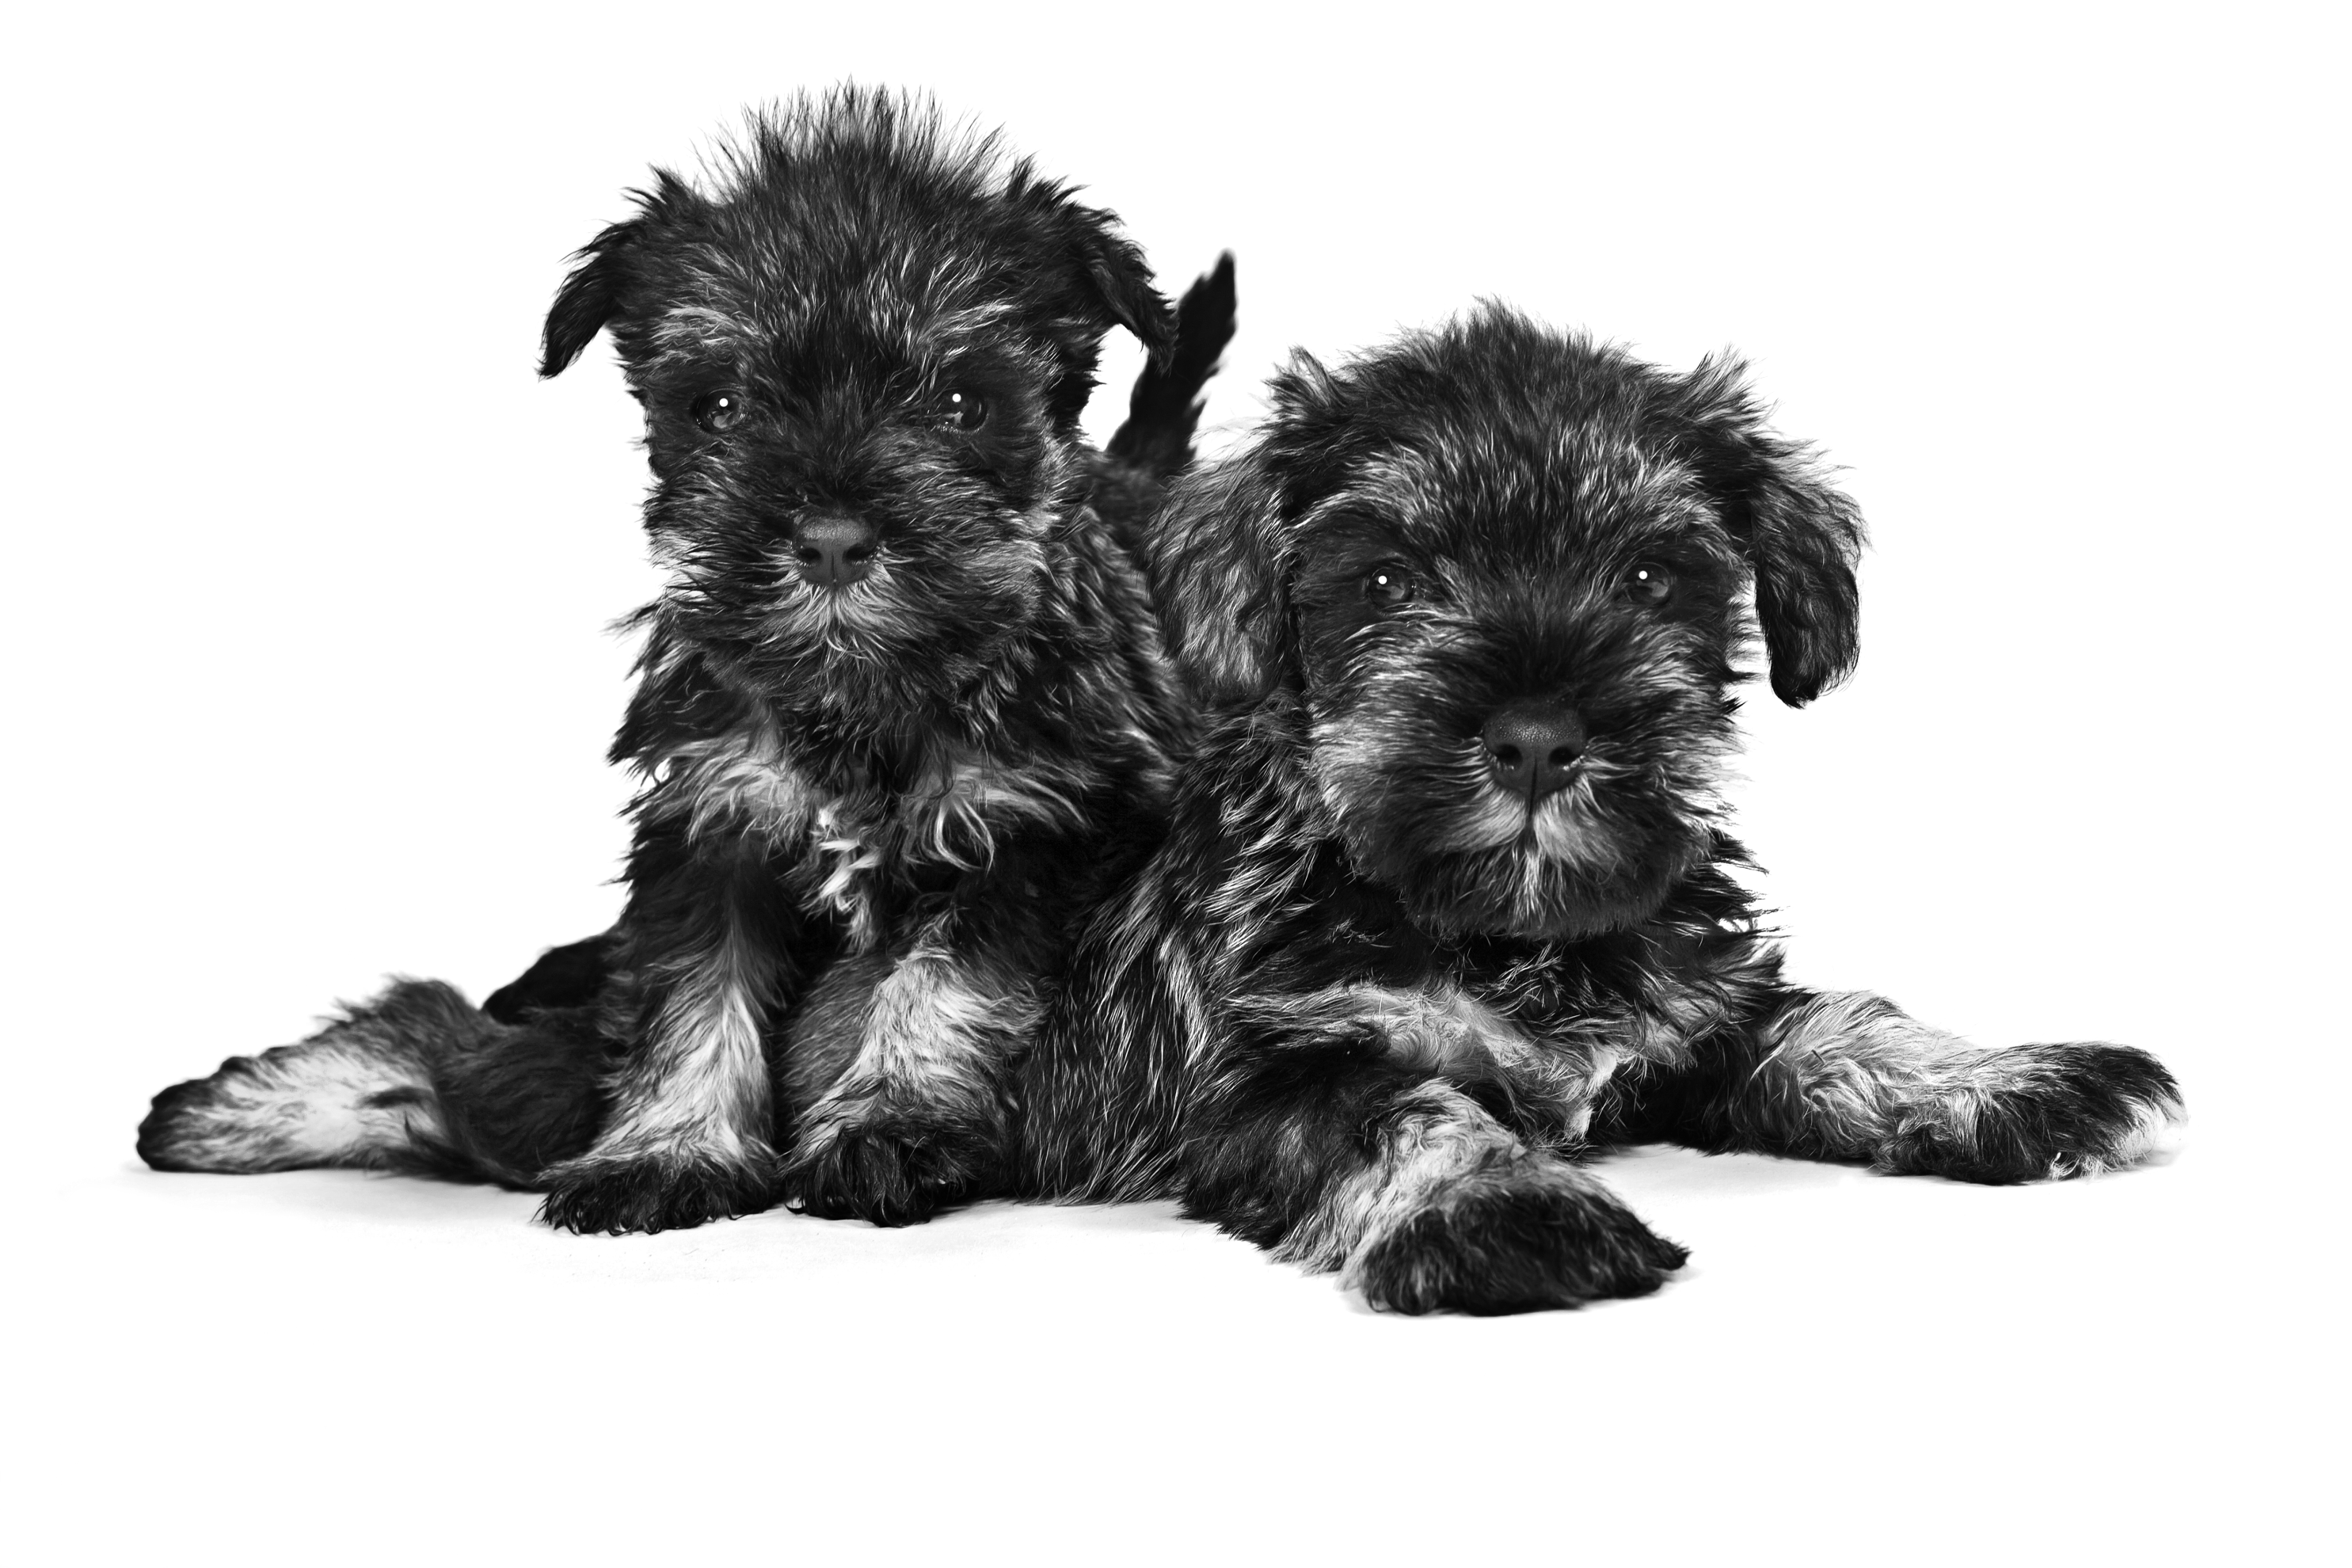 2 miniature schnauzer puppies - black and white image